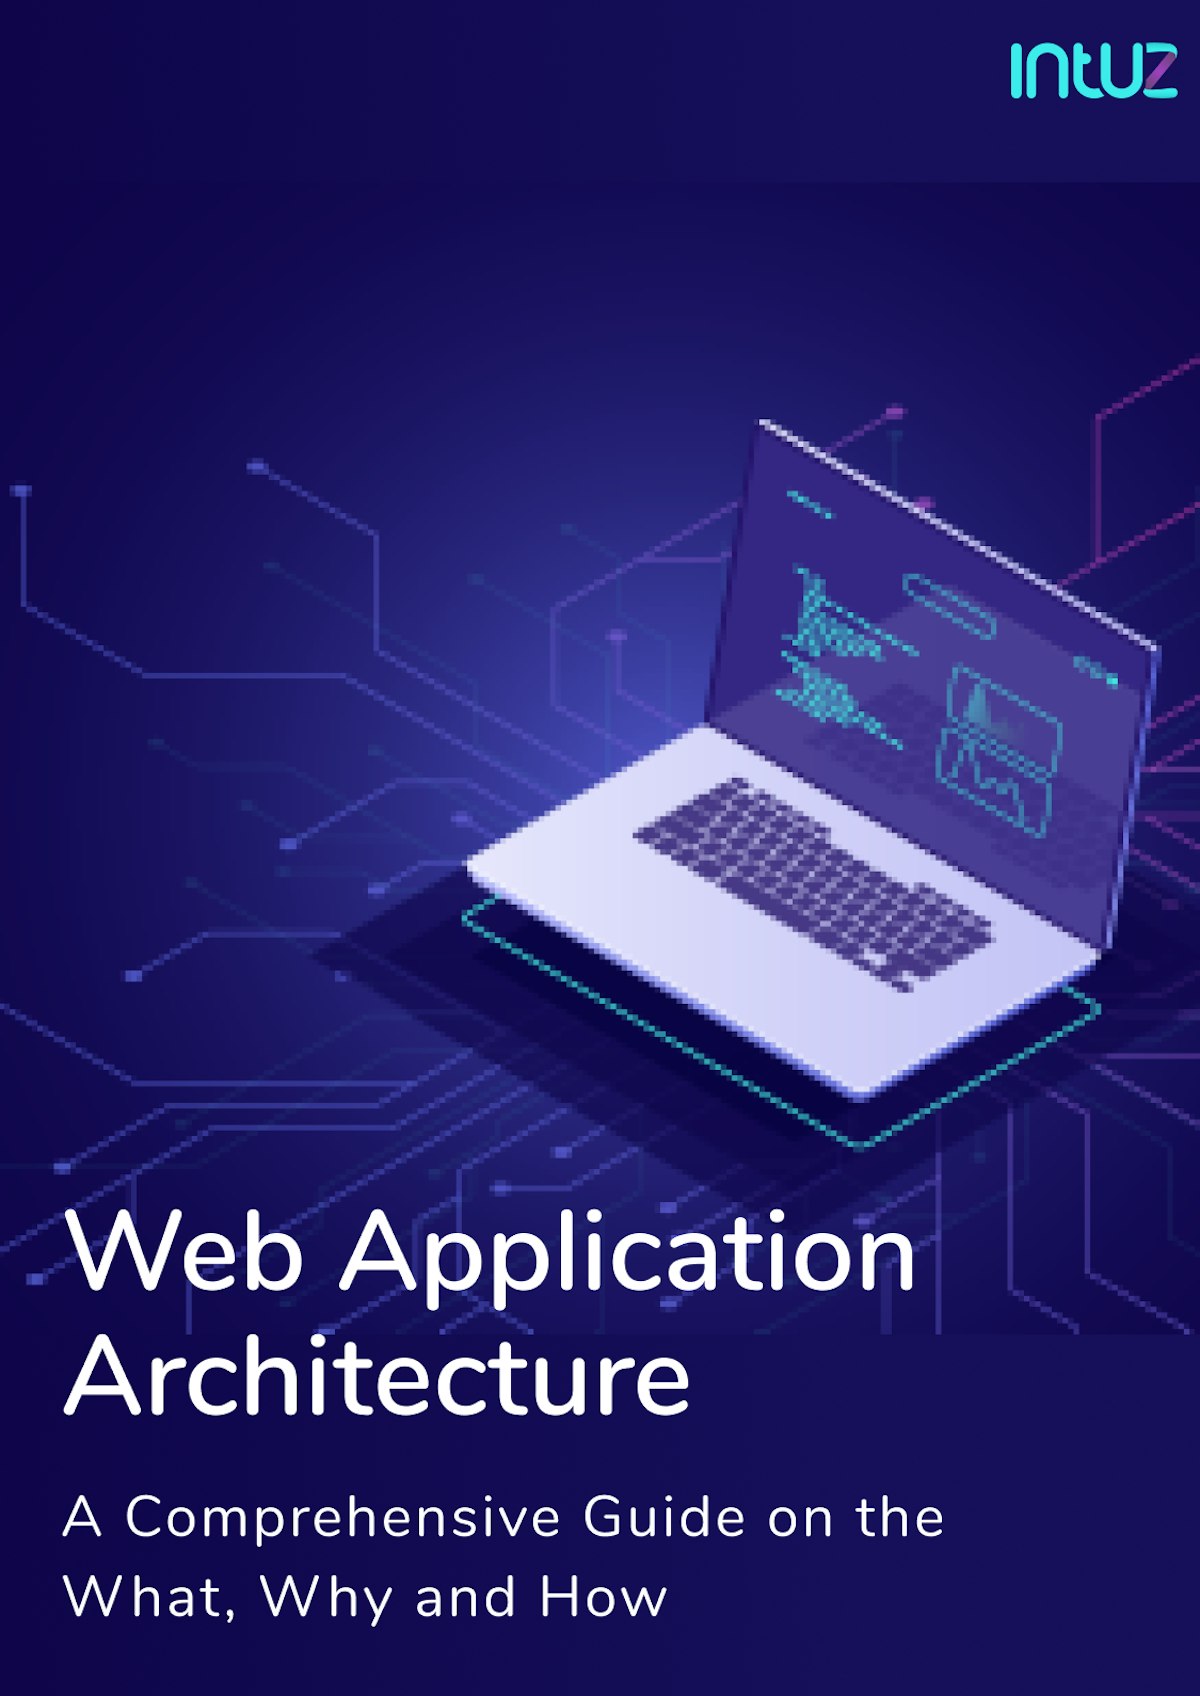 Web Application Architecture - Guide